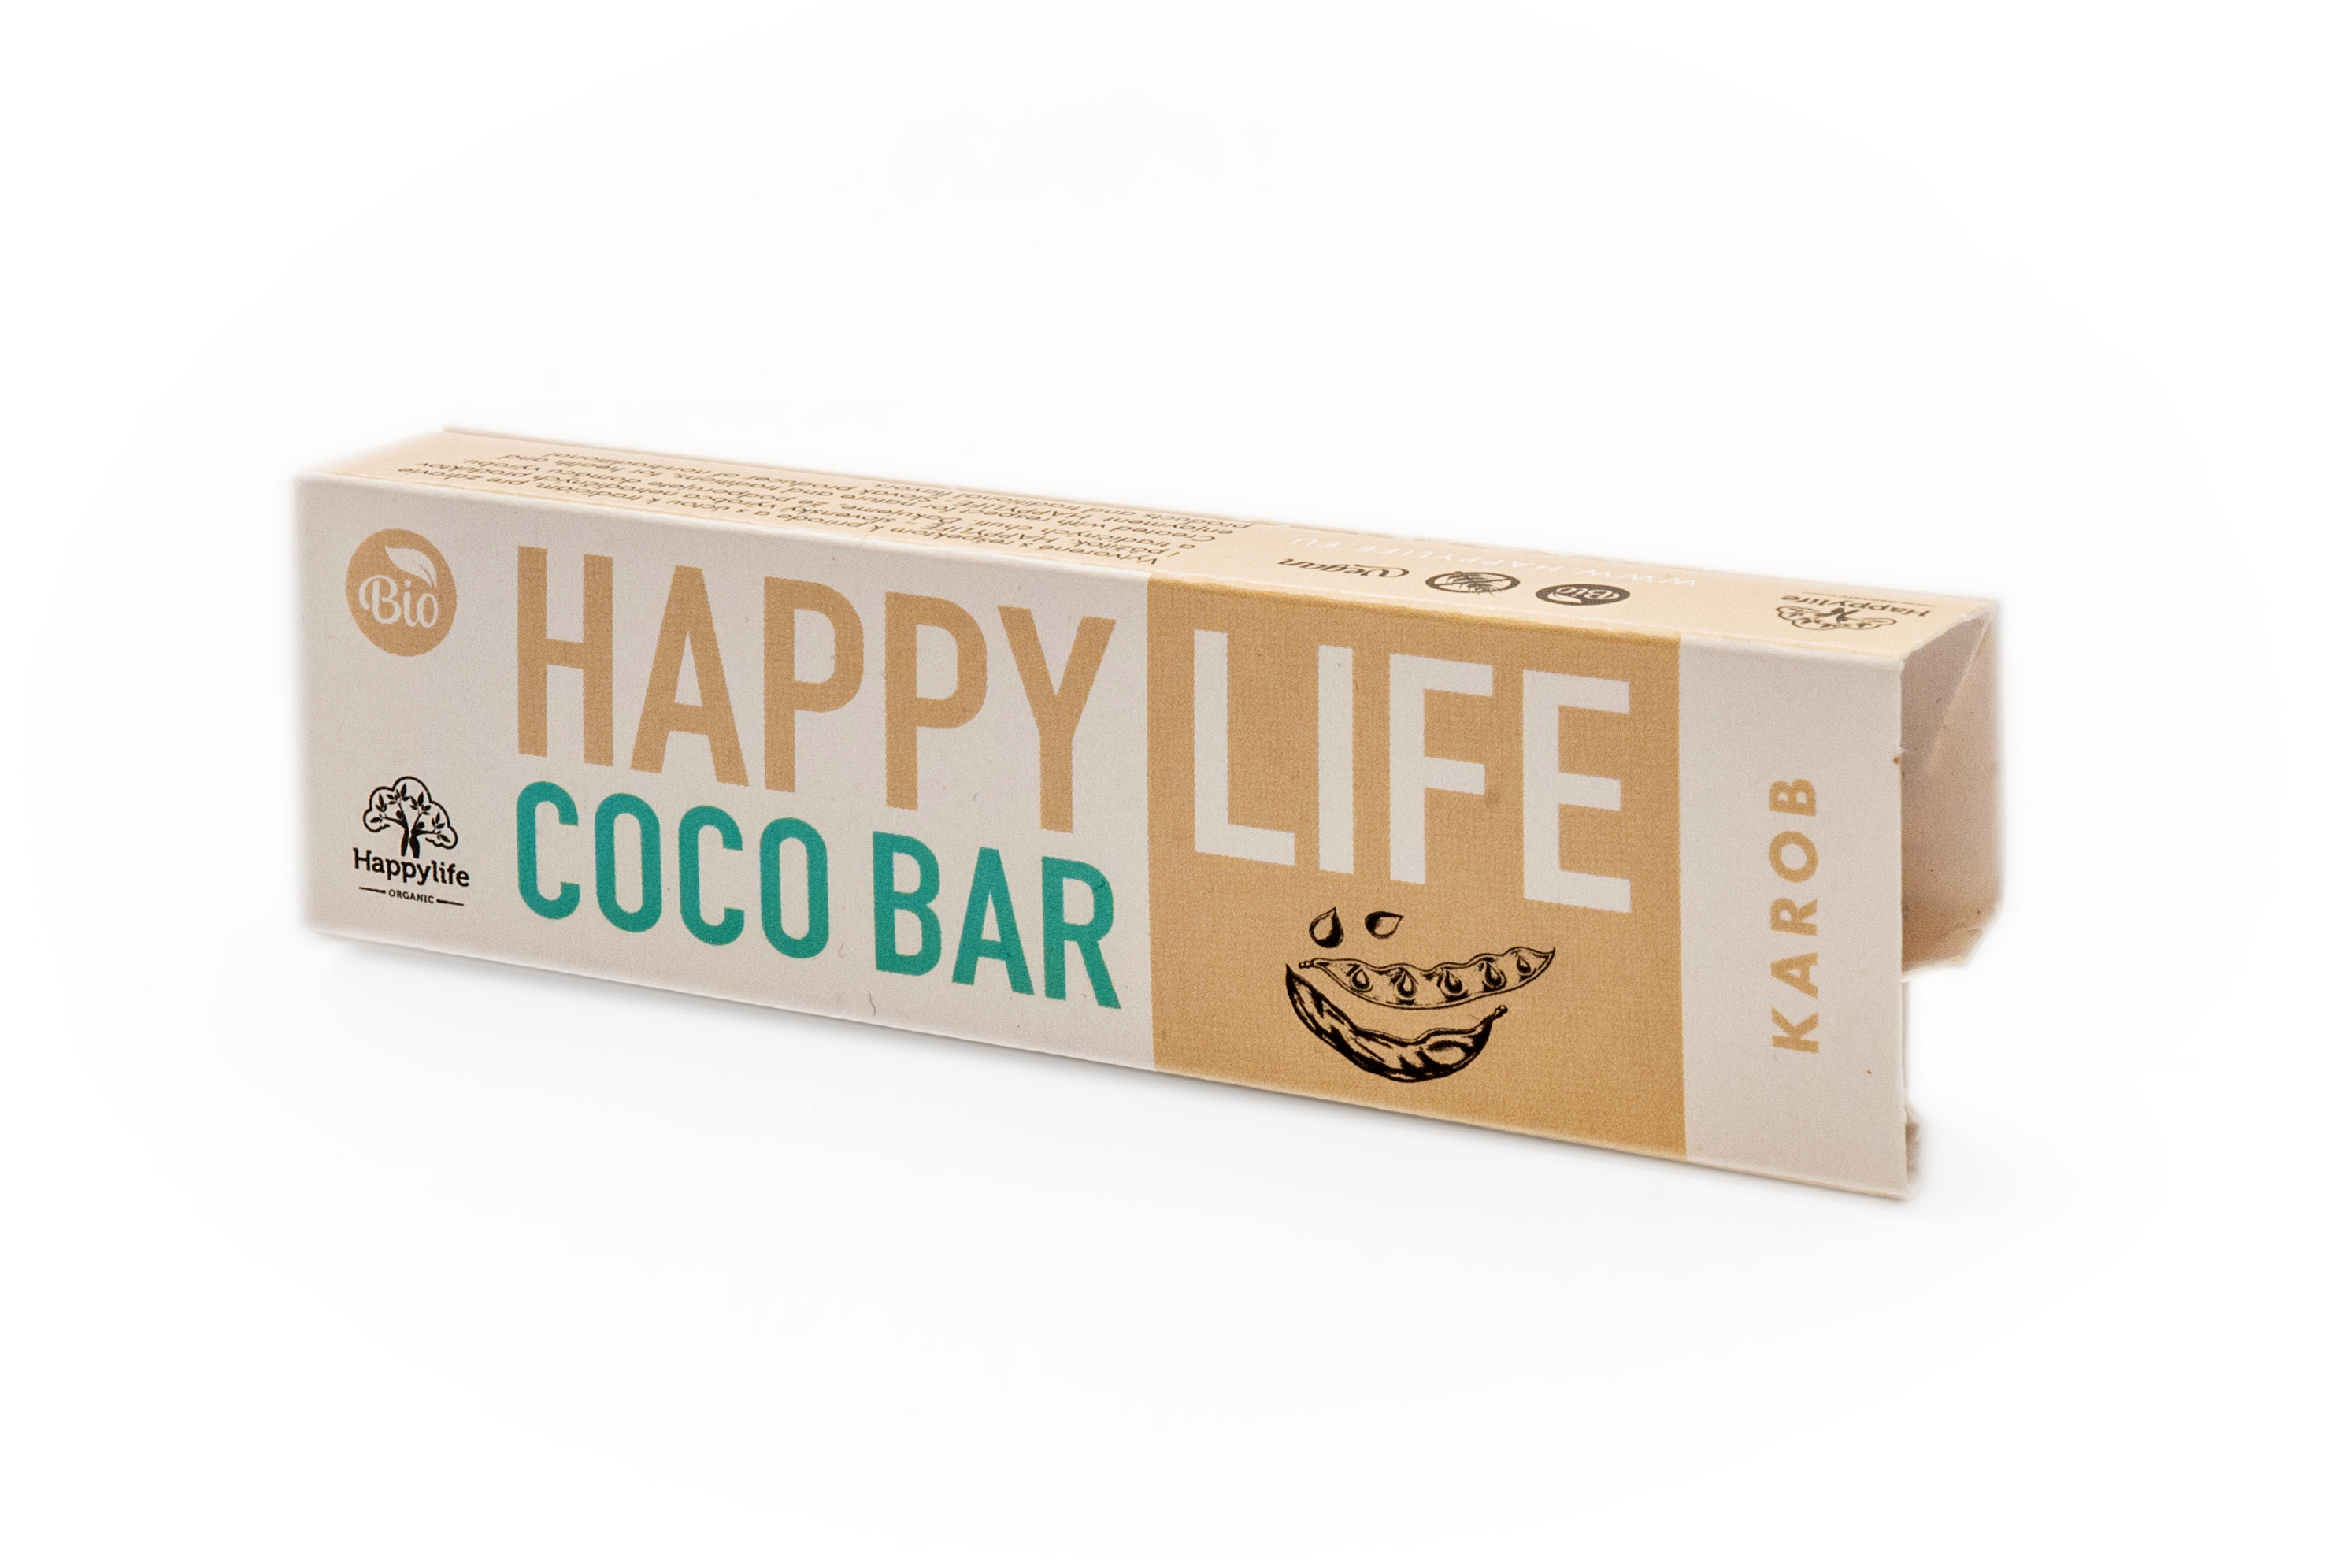 Happylife COCO BAR - Organic Coconut Bar